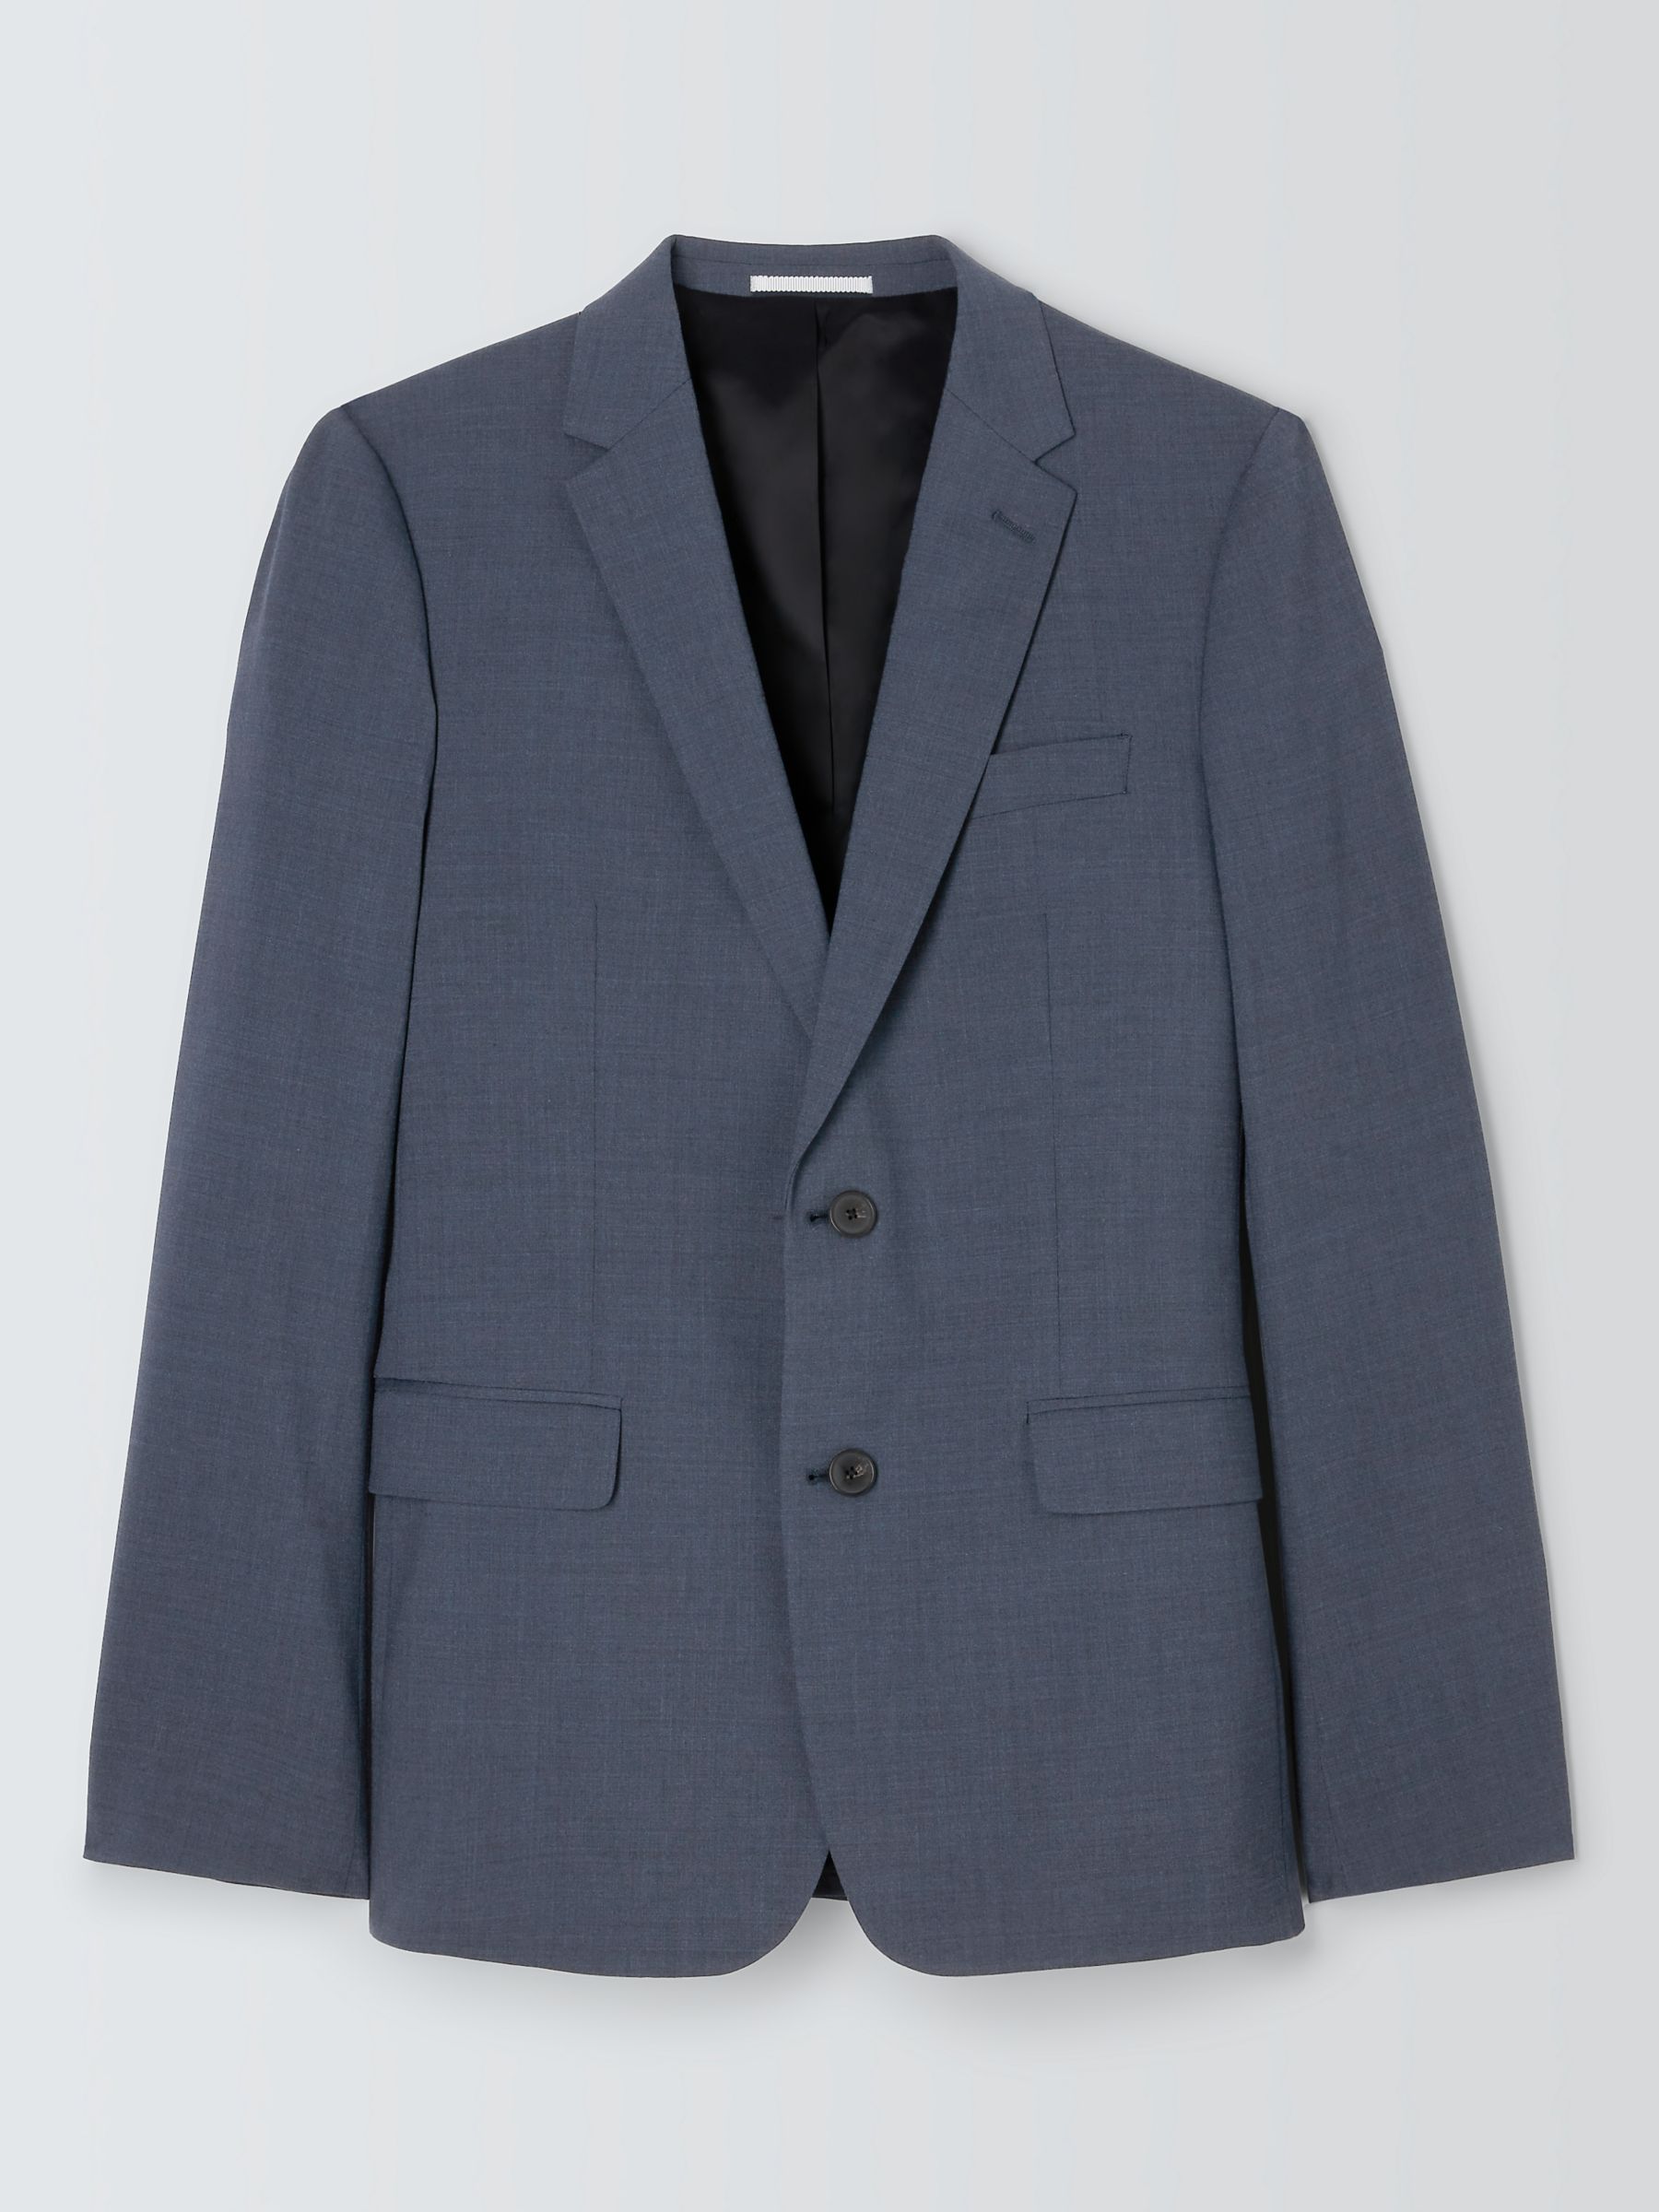 Kin Leo Wool Blend Slim Fit Suit Jacket, Airforce Blue, 46R